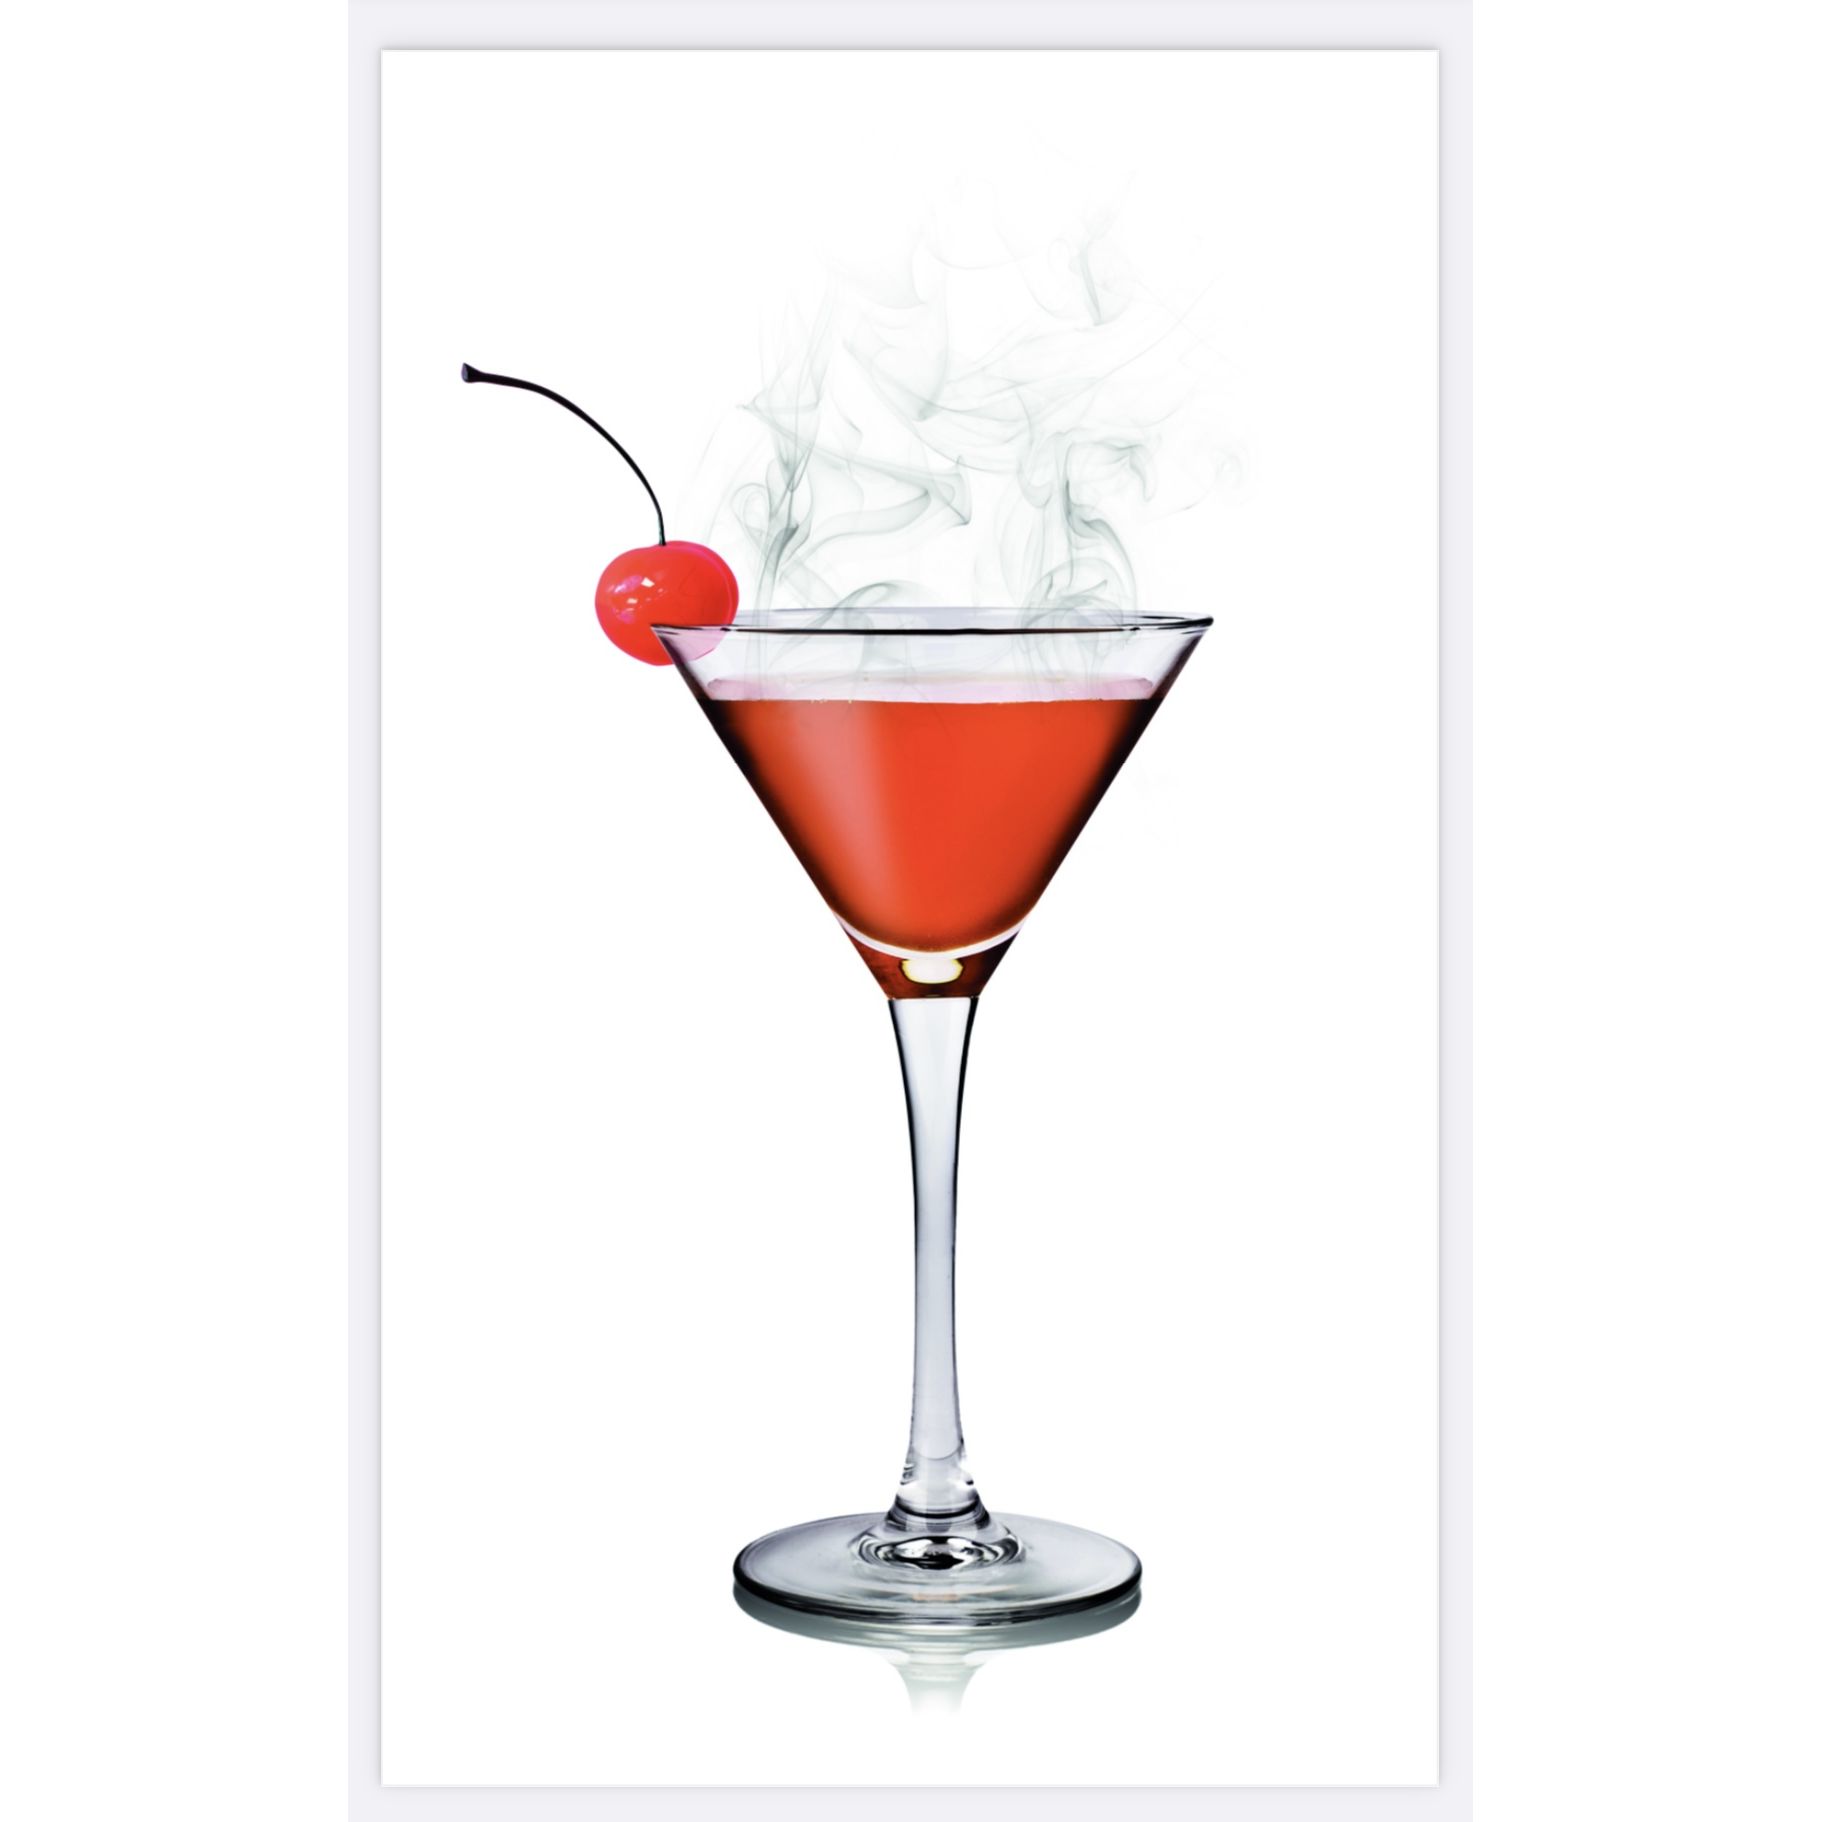 Balmain Barmaid Smoked - The Smoking Culinary and Cocktail Kit